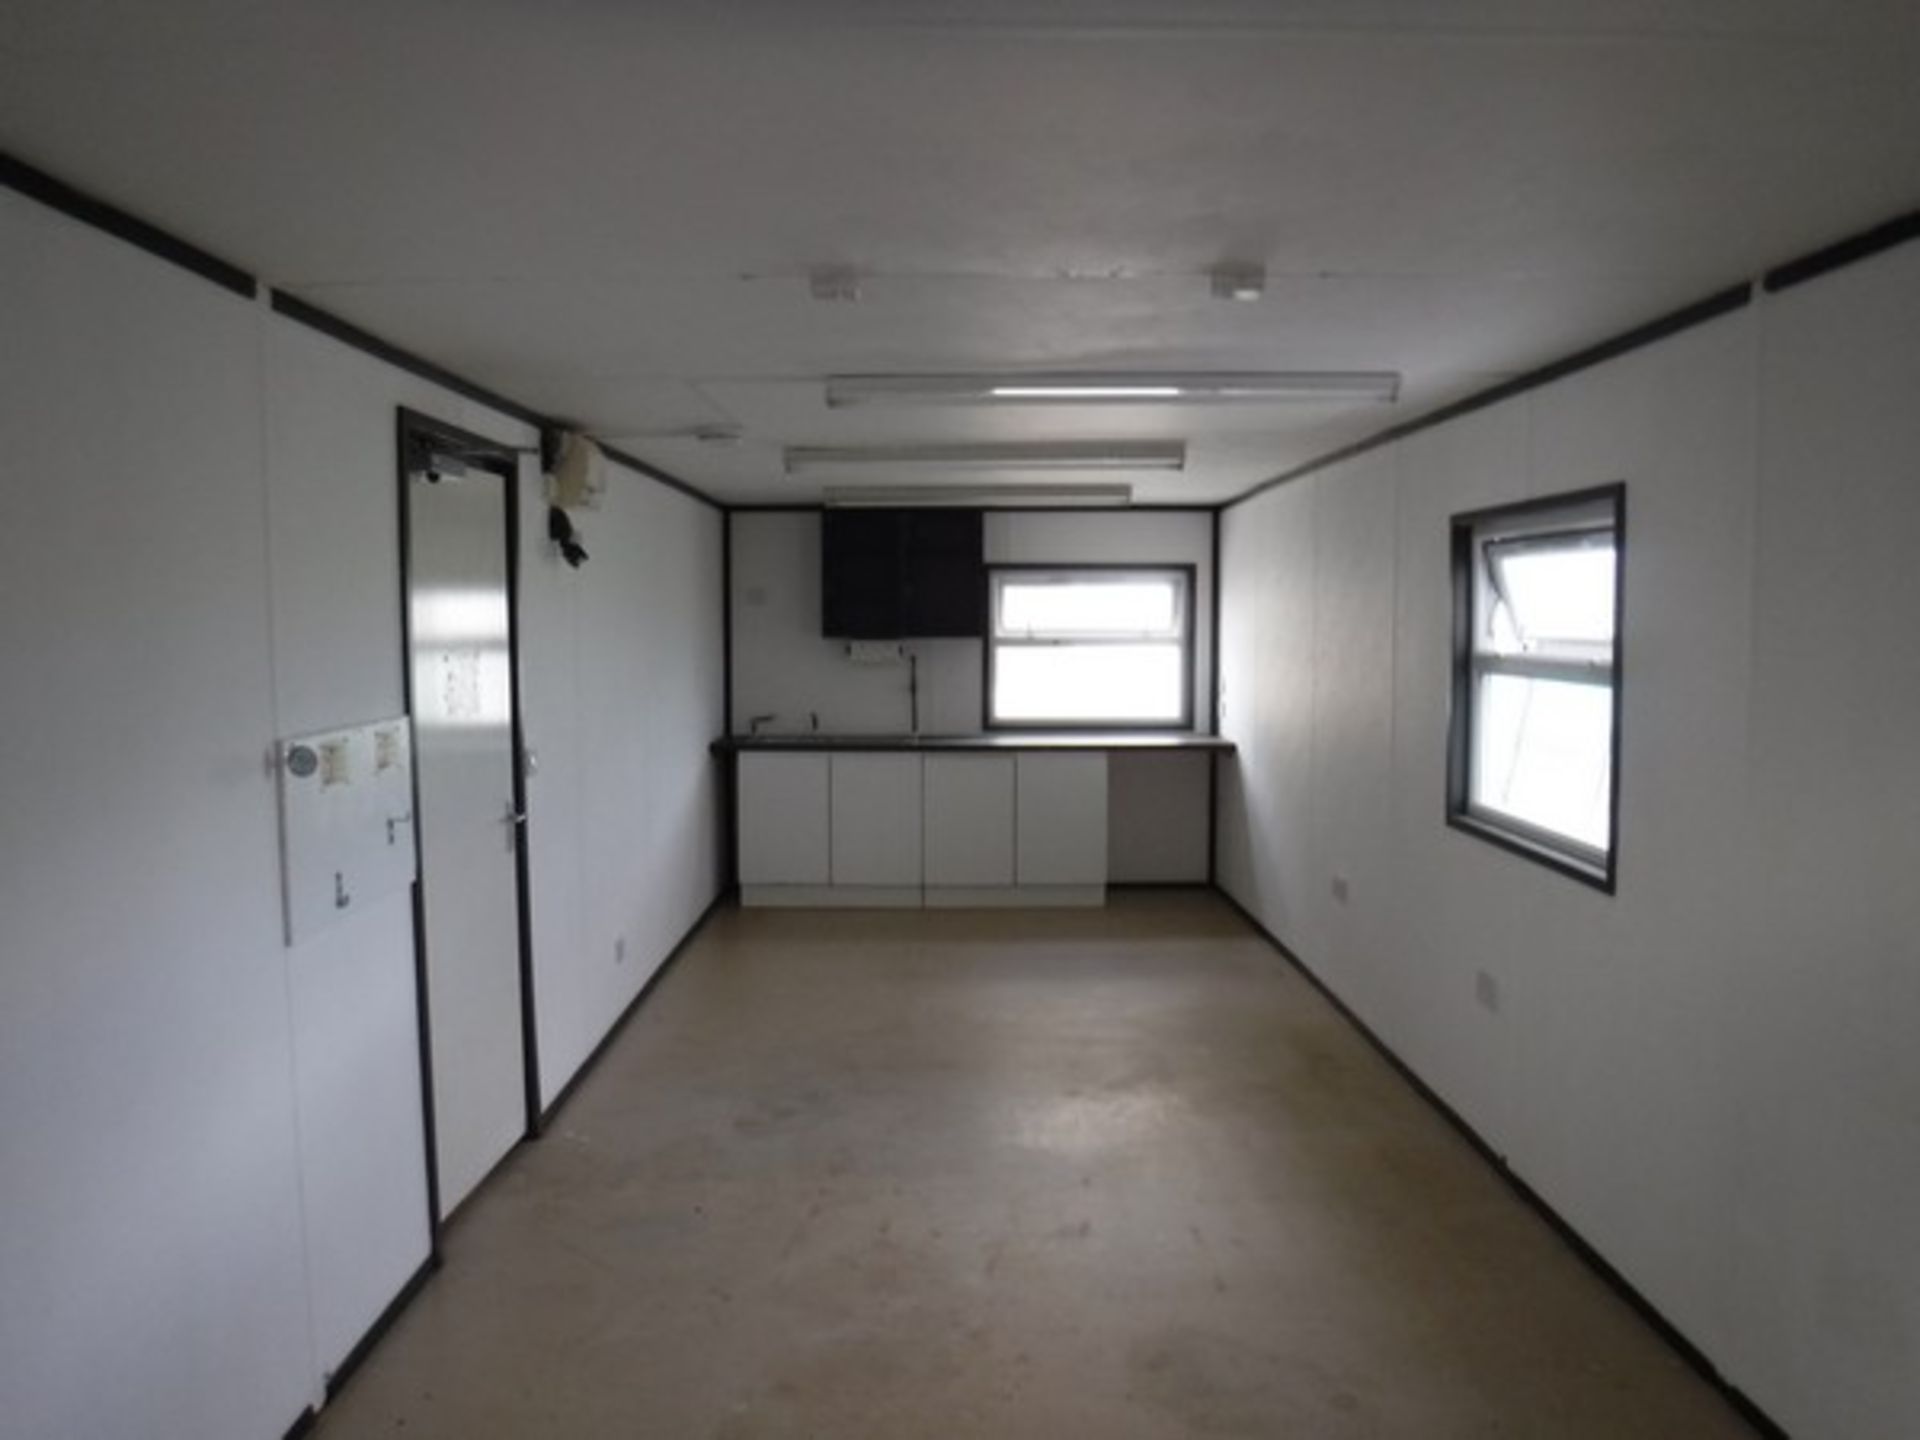 32' x 10' JACKLEG canteen cabin. Keys in office - Image 5 of 7